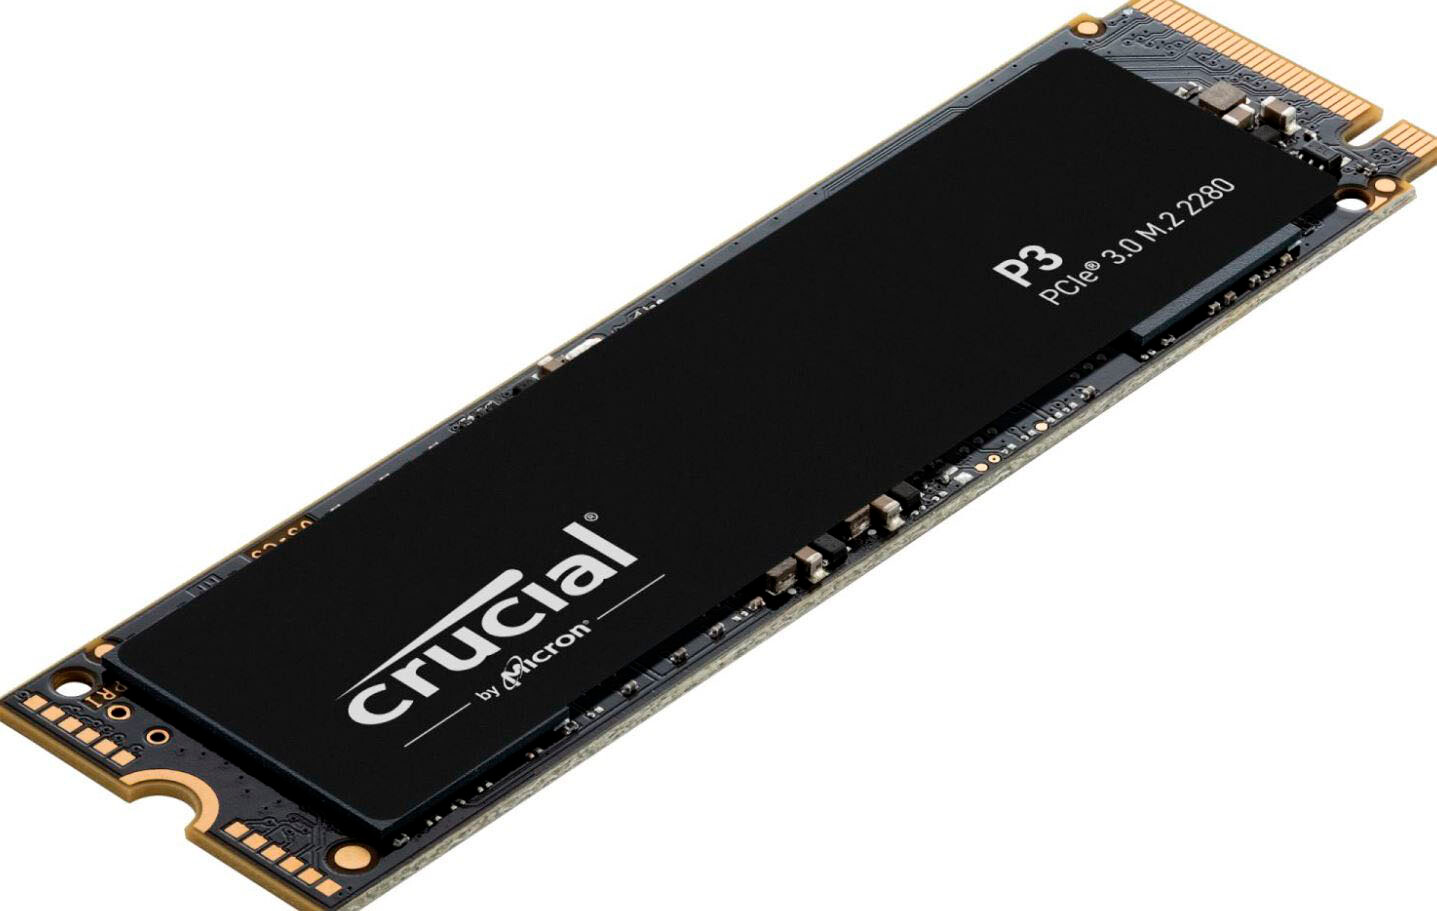 Crucial® P3 500GB 3D NAND NVMe™ PCIe® M.2 SSD